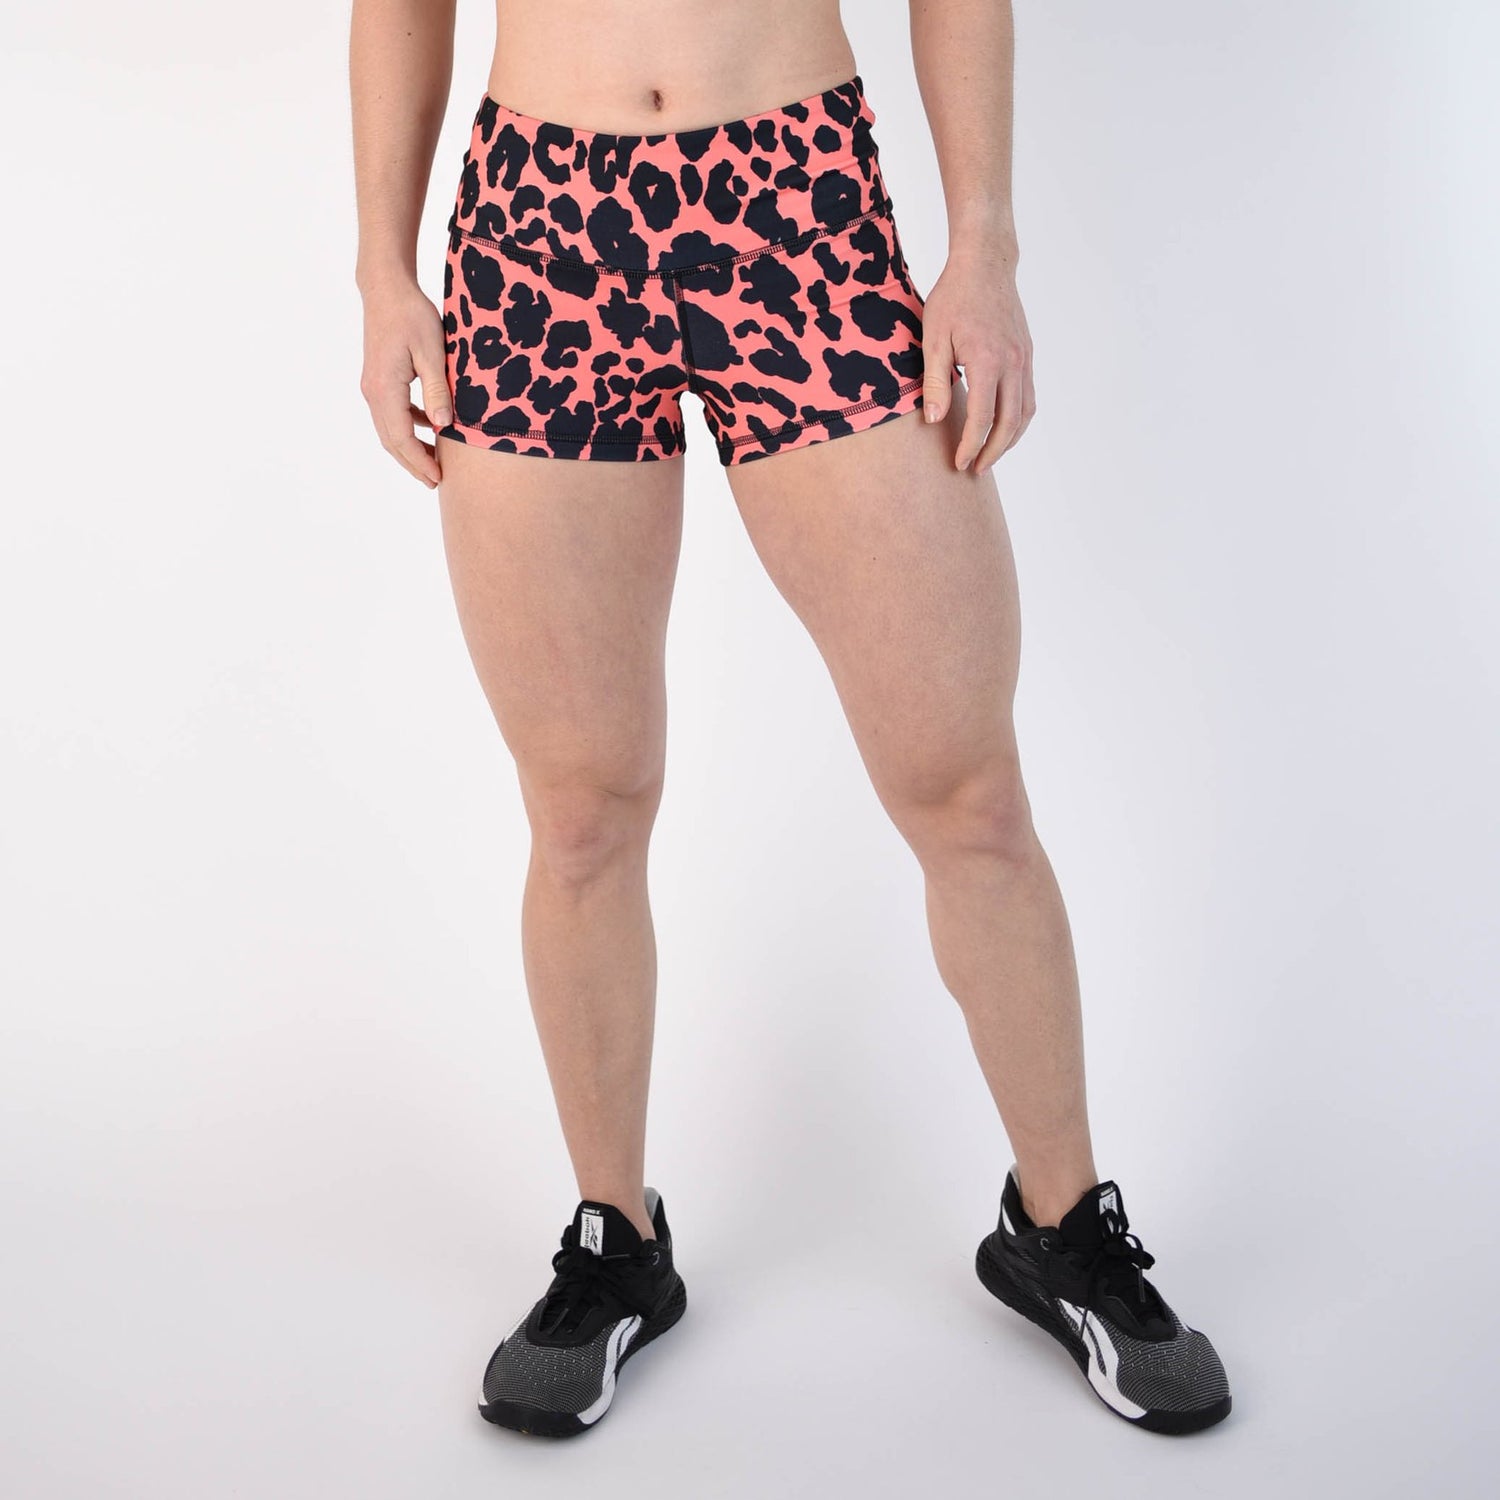 FLEO Coral Leopard Shorts (High-rise Original) - 9 for 9